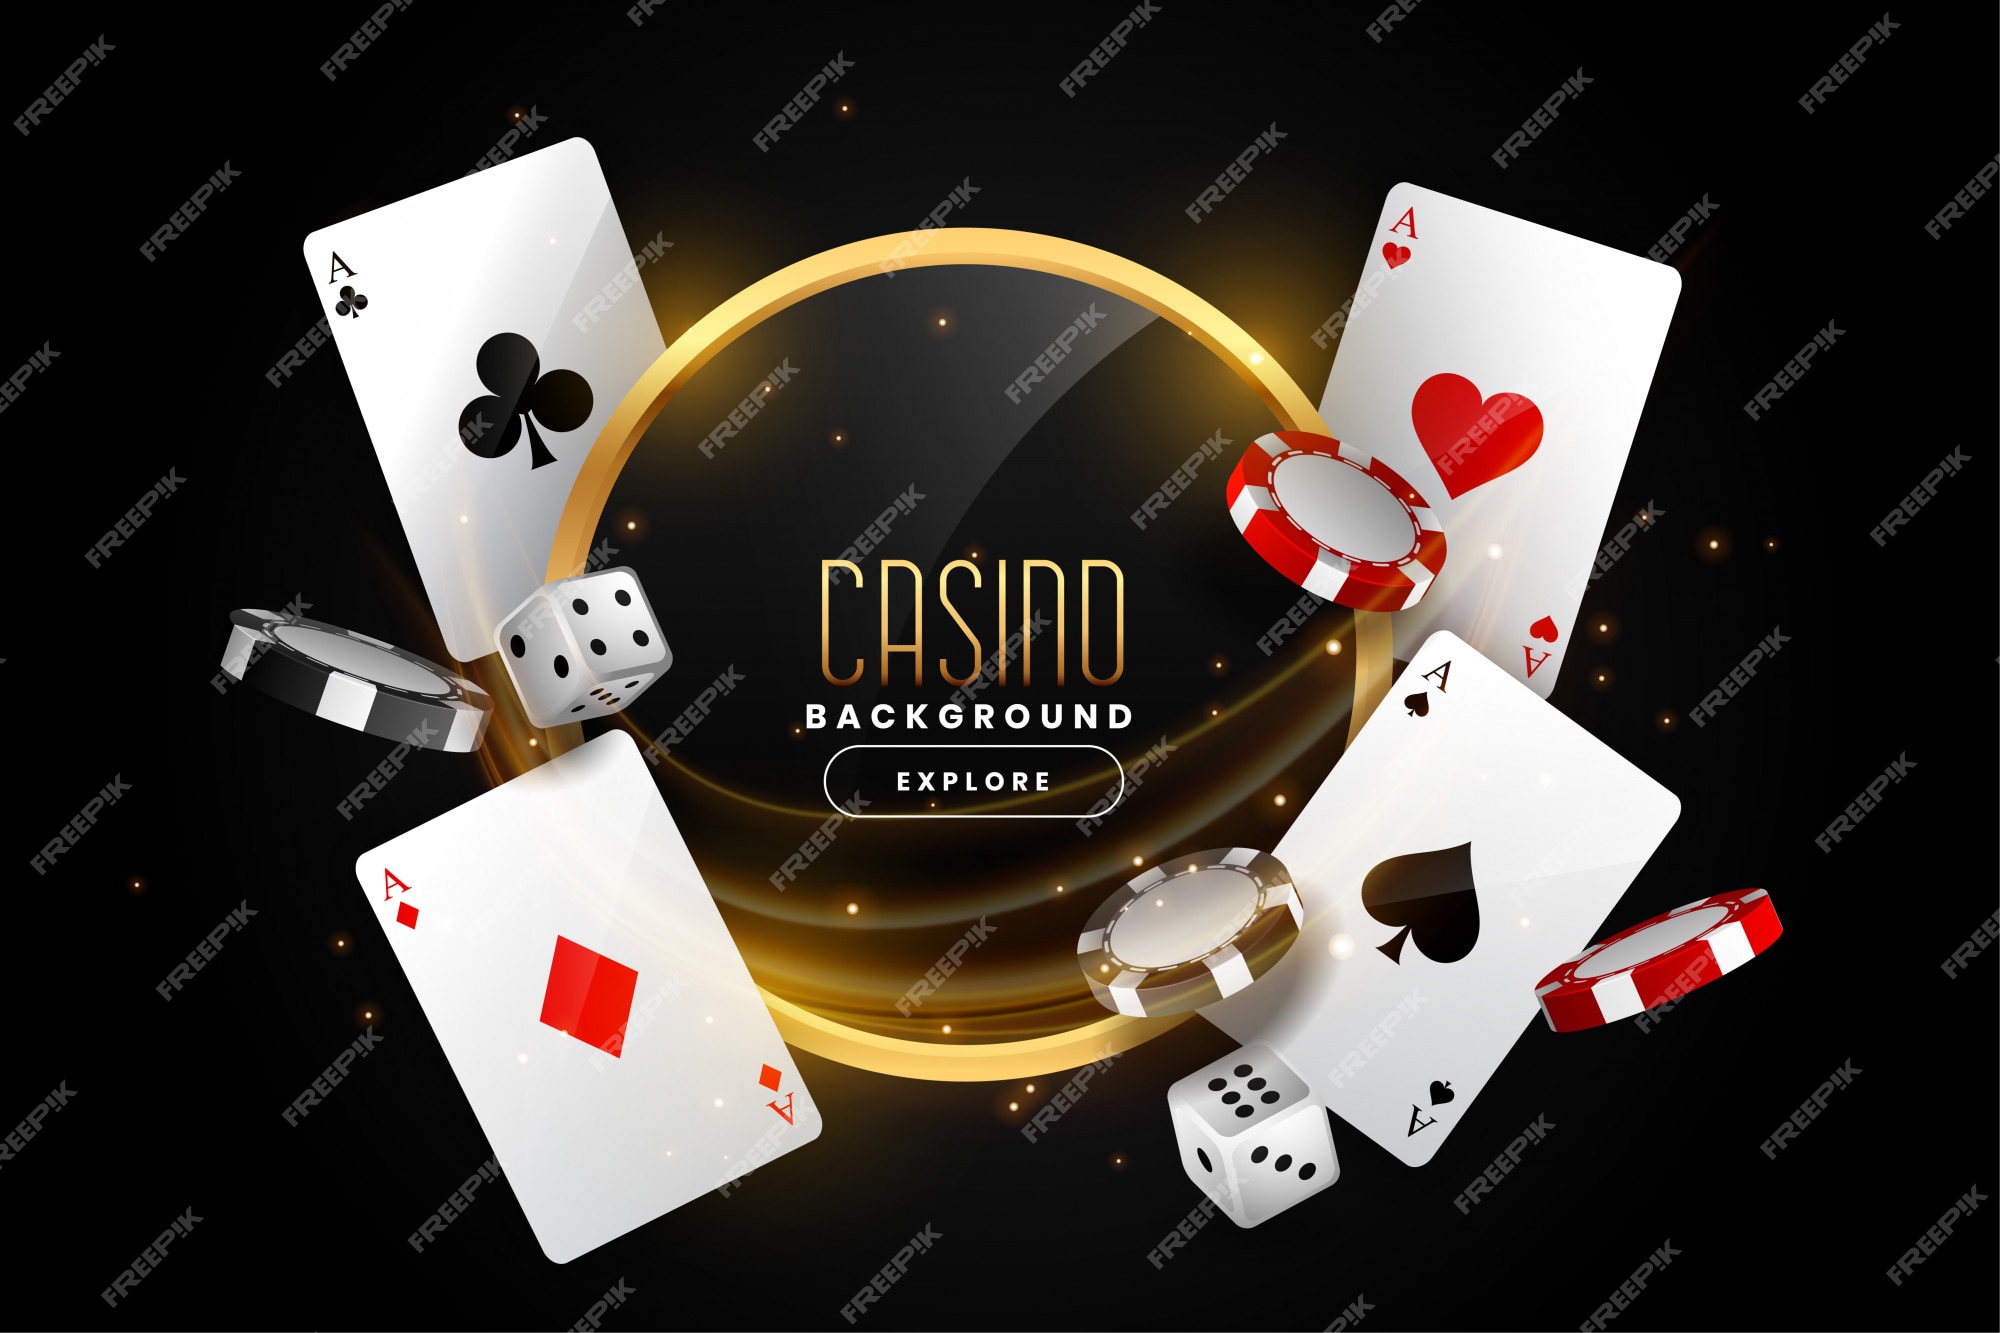 Casino Images | Free Vectors, Stock Photos & PSD